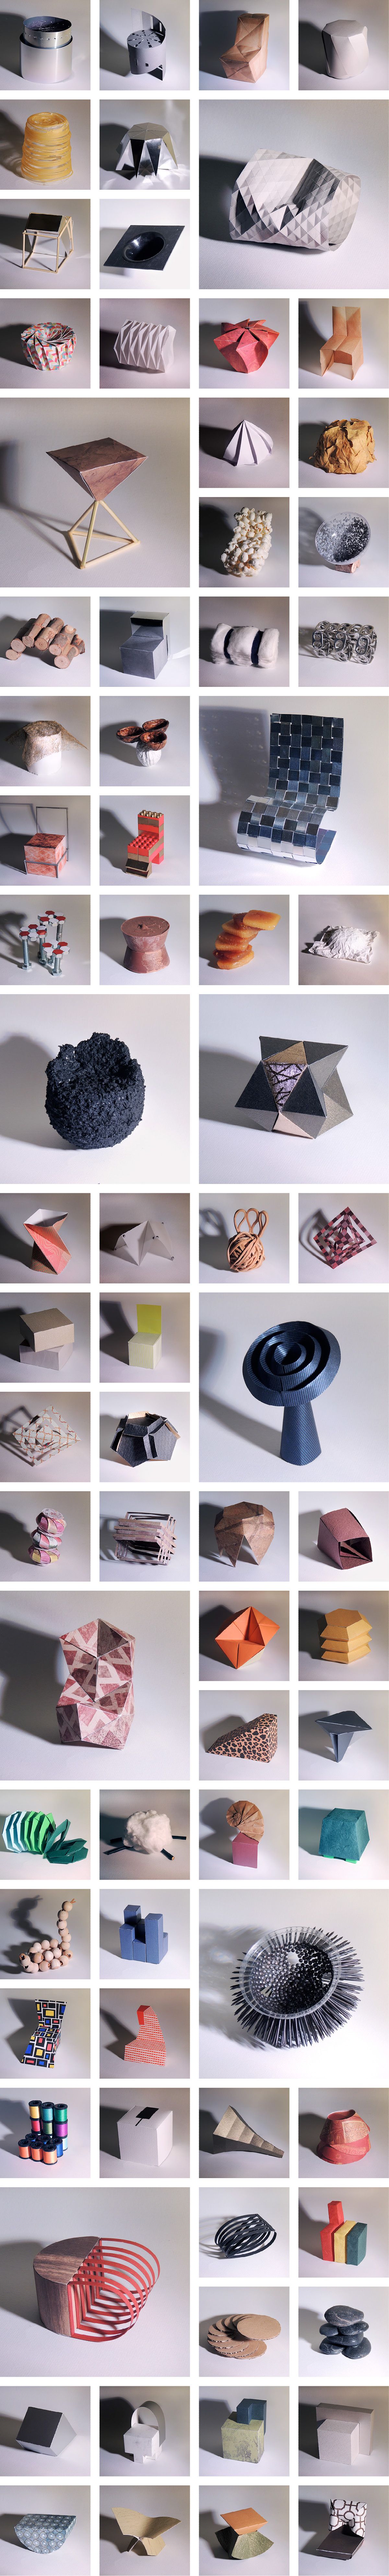 seventyseven chairs materials Leonie werts Netherlands maastricht eindhoven product design paper stool chair